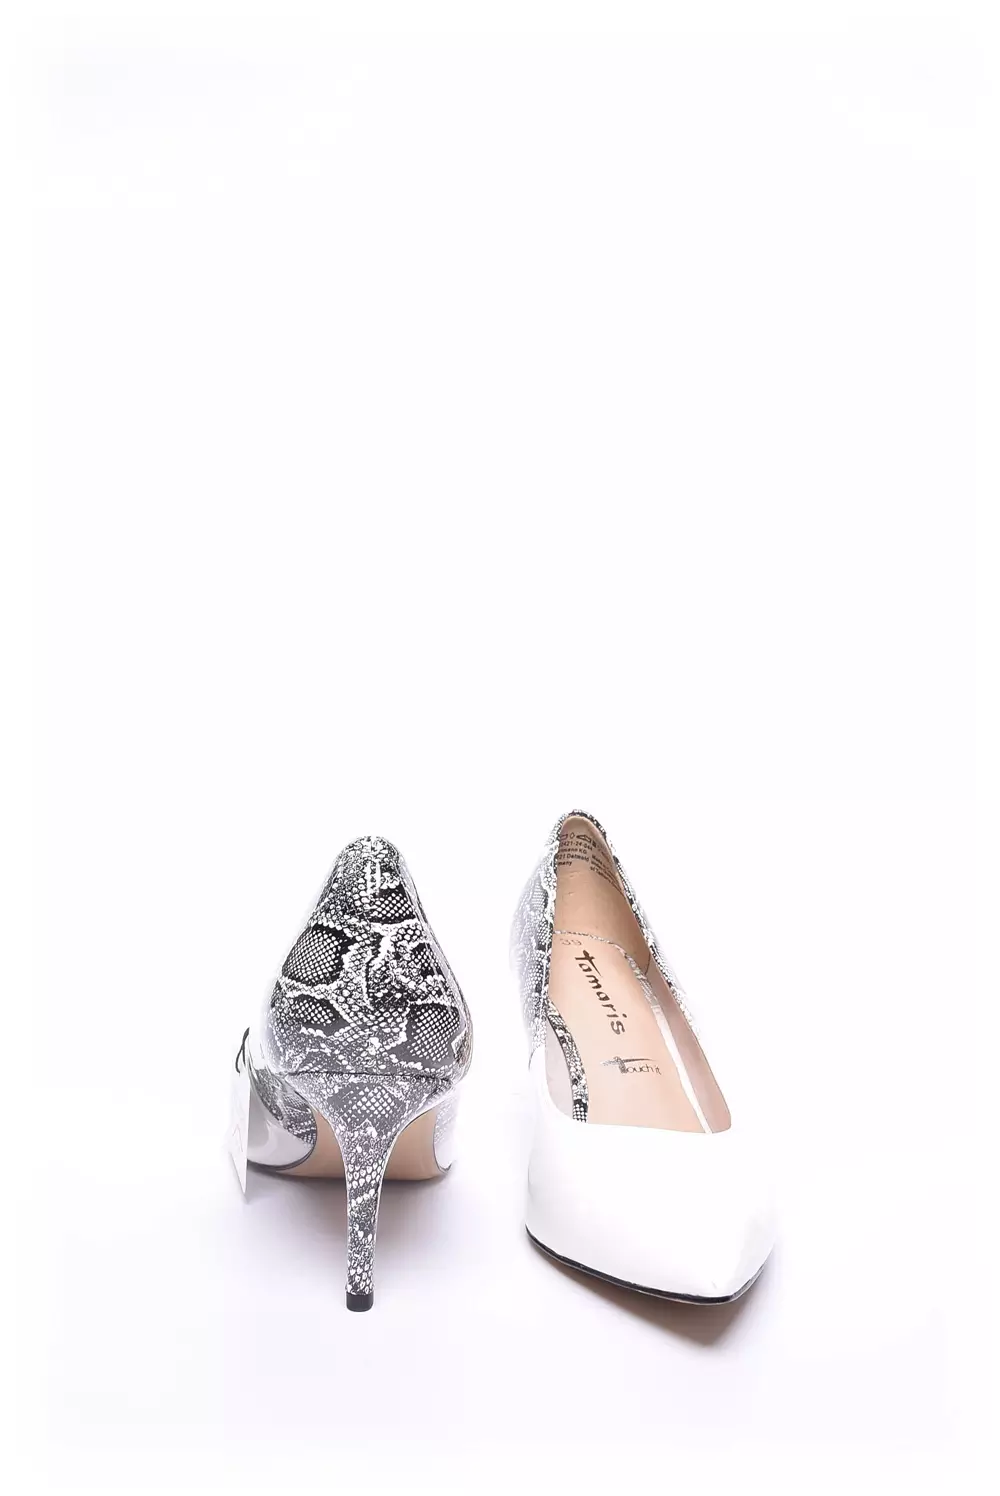 Pantofi dama stiletto [3]